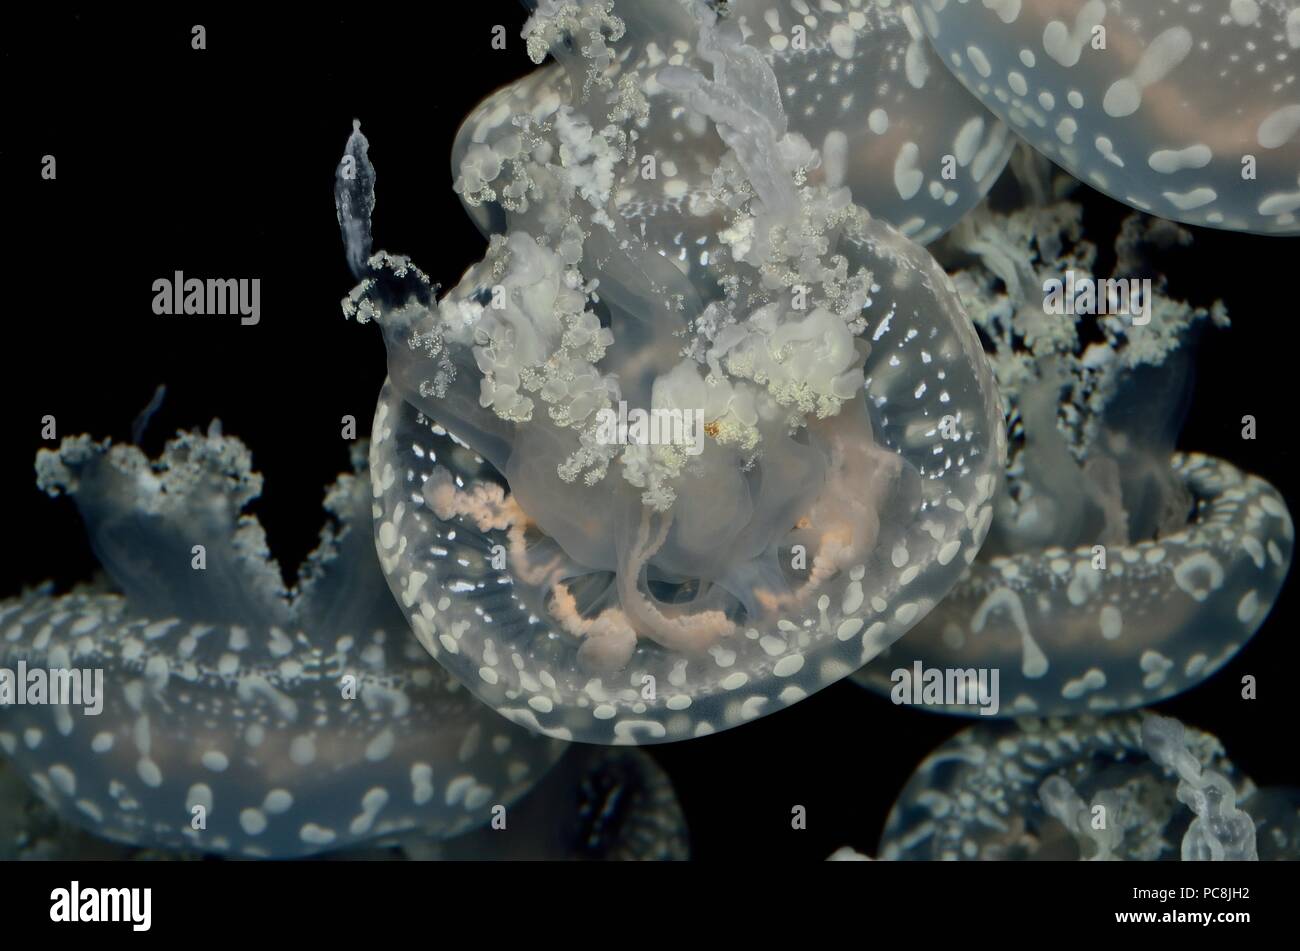 spotted jellyfish, Weißgefleckte Wurzelmundqualle, Mastigias sp. Stock Photo